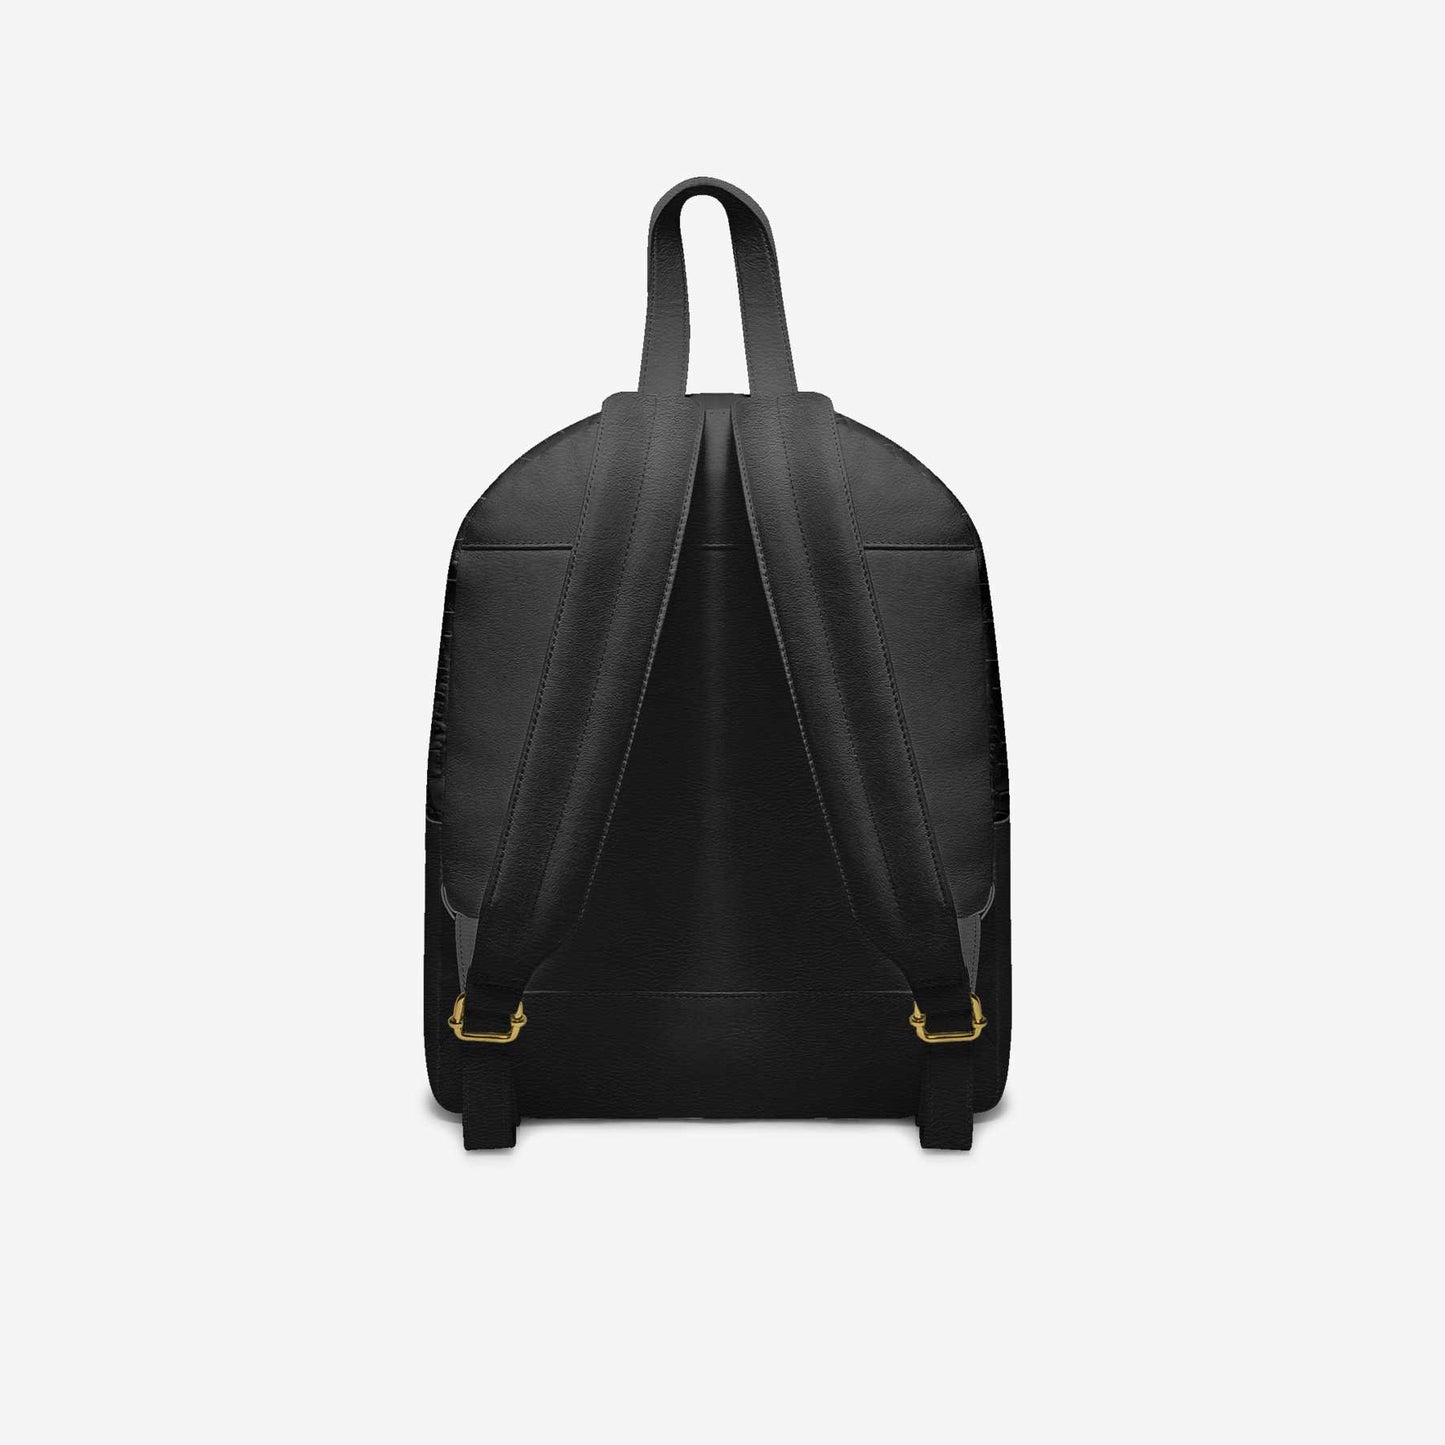 GIWIGI OTG Luxe Backpack